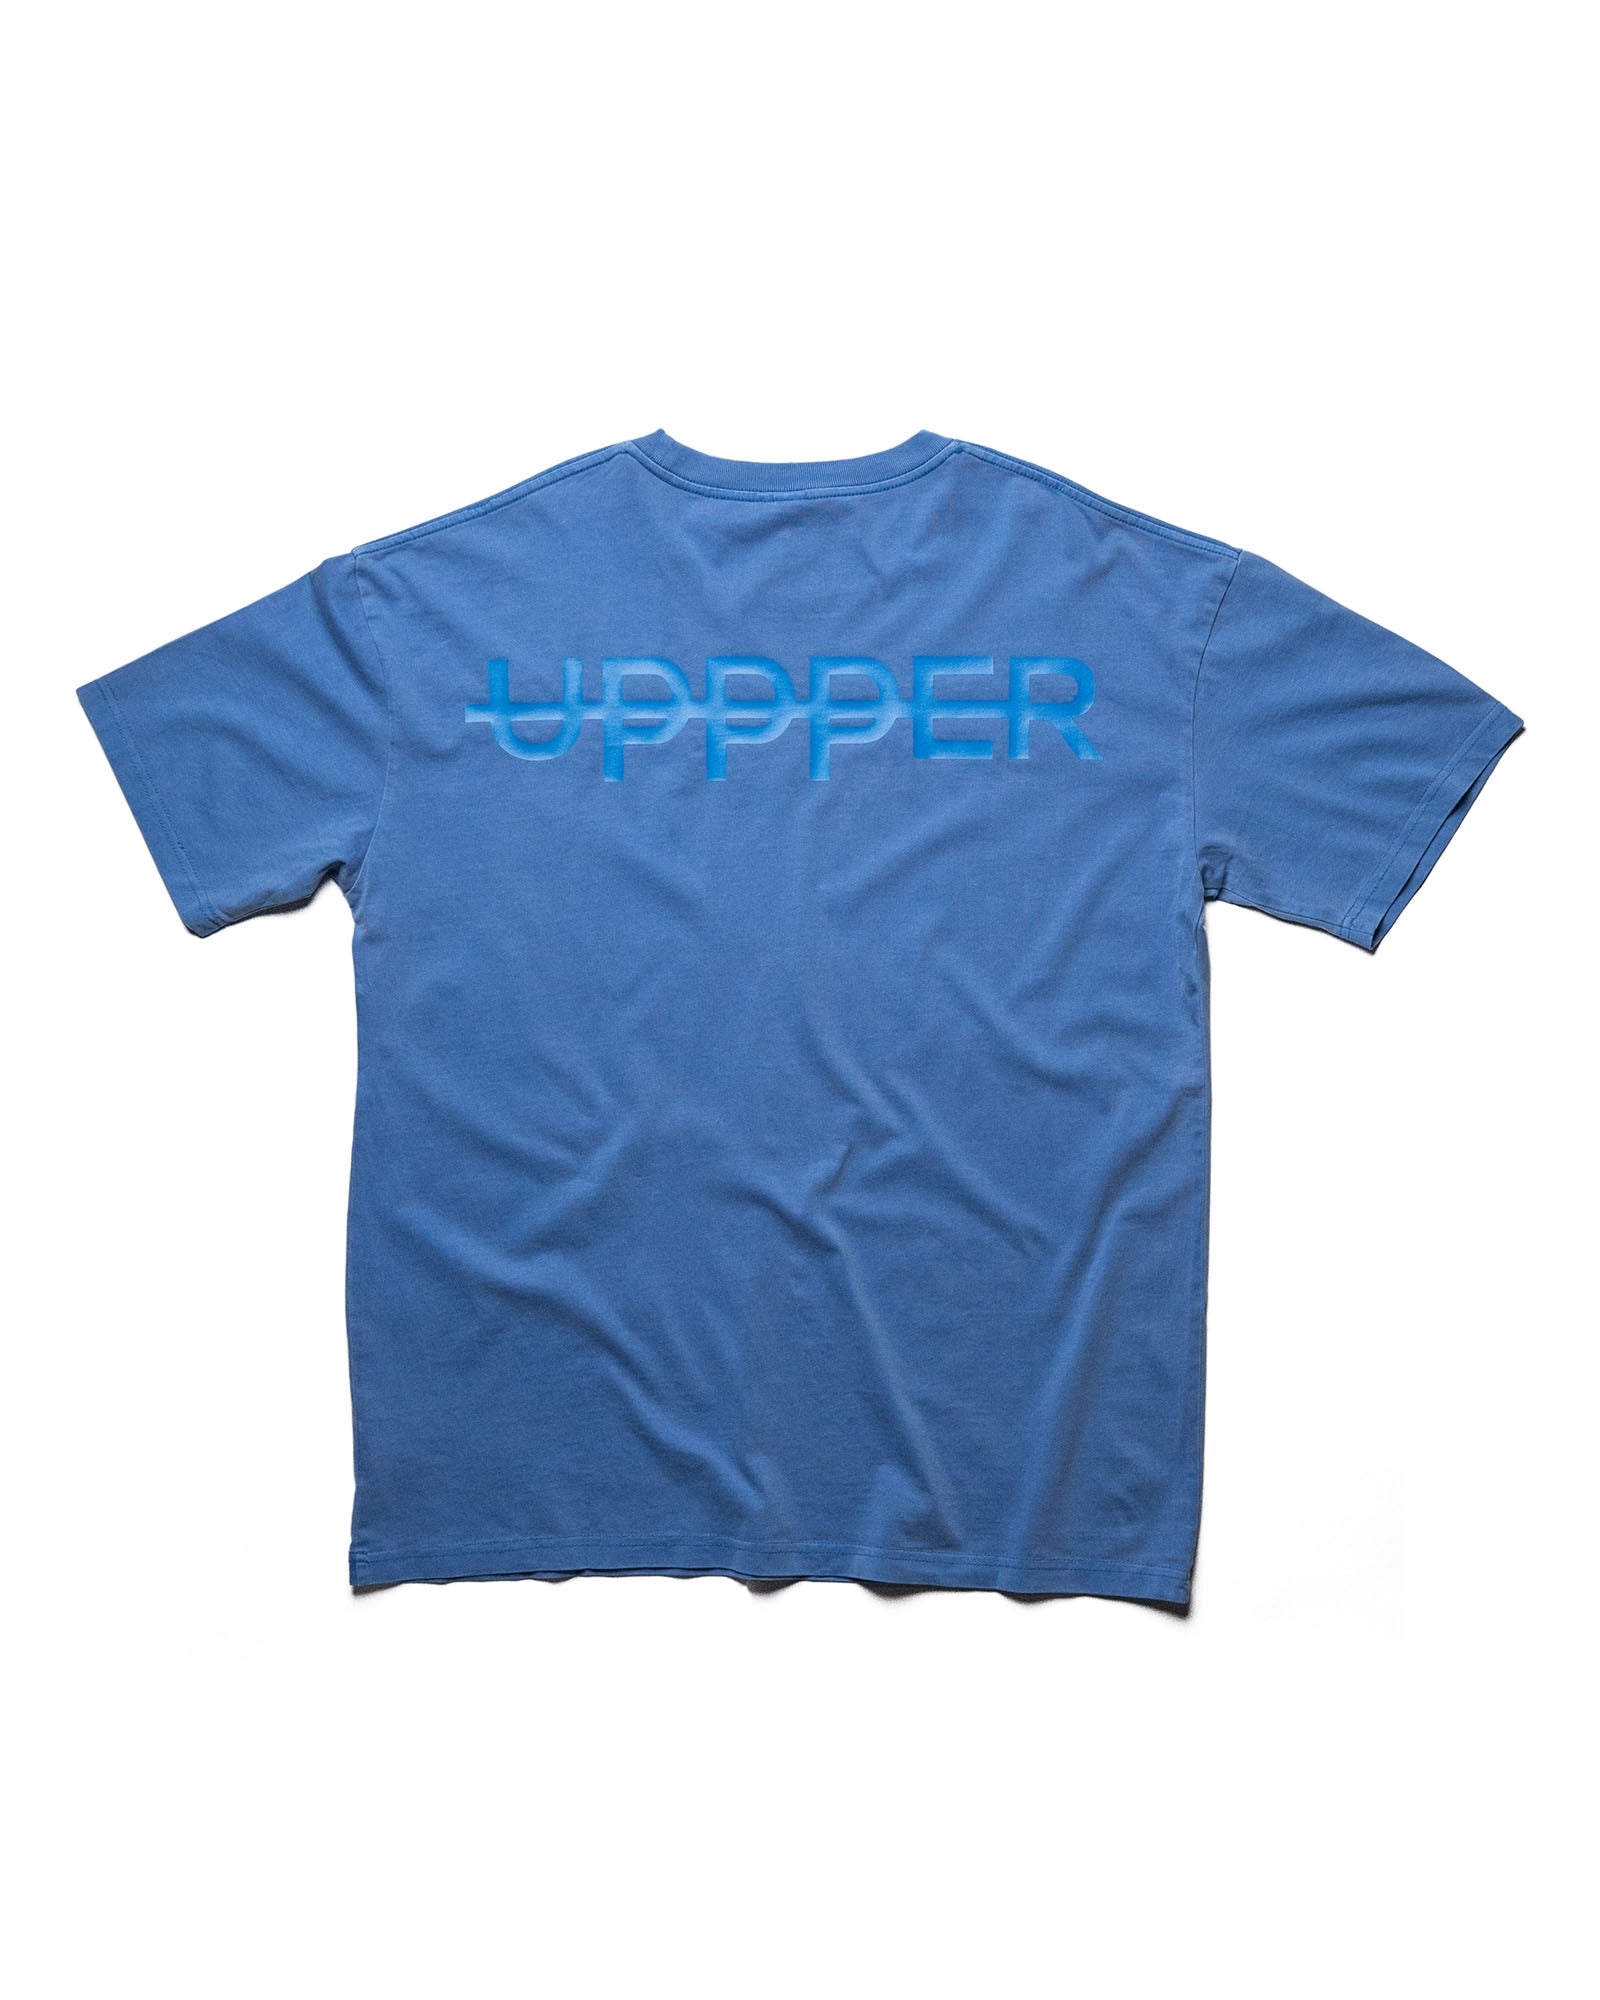 uppper core t-shirt washed blue